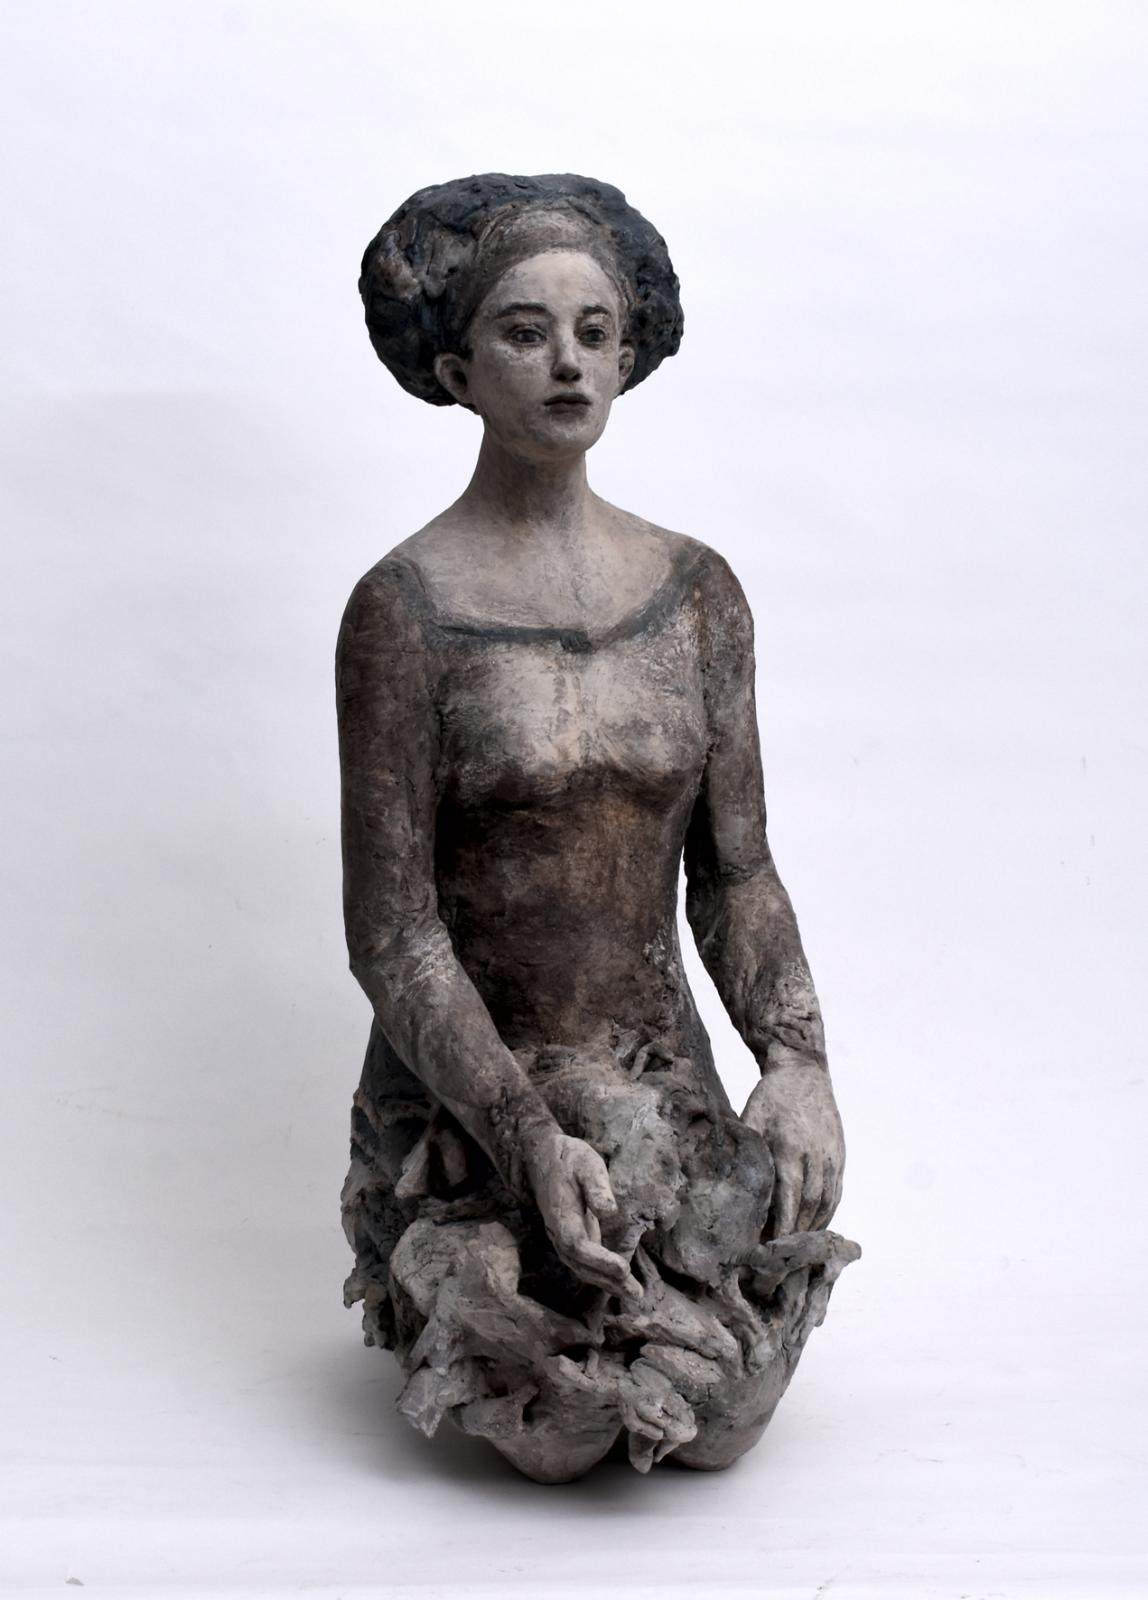 Silvia Siemes, Grosse Sitzende, 2019, Terrakotta, gebrannt, Höhe: 87 cm, sis002de